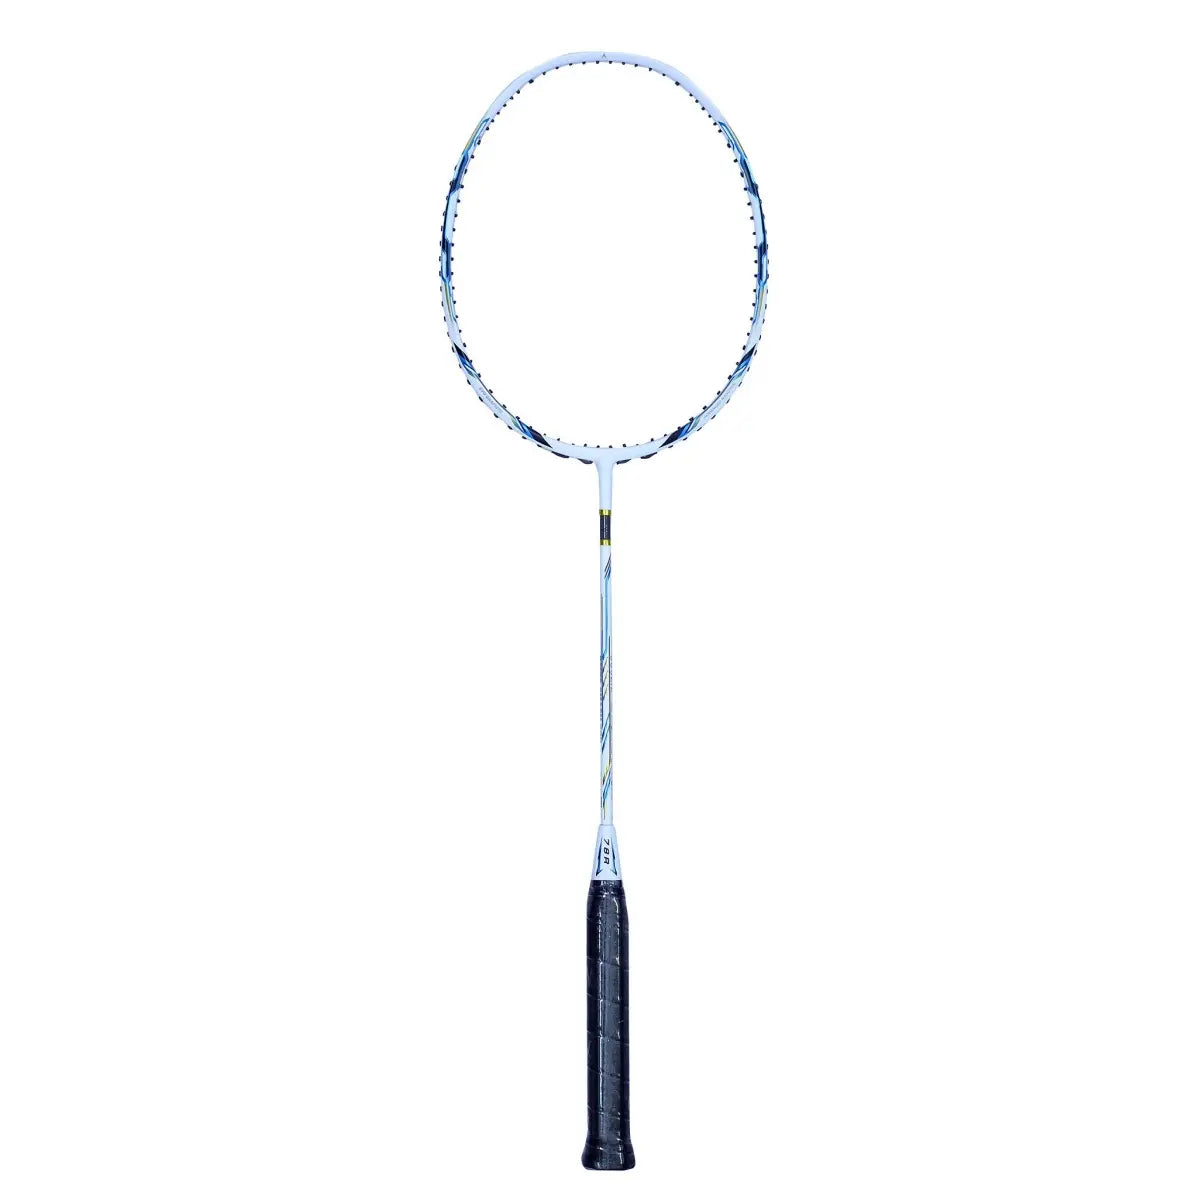 Gosen Roots Smash 78 Badminton Racket